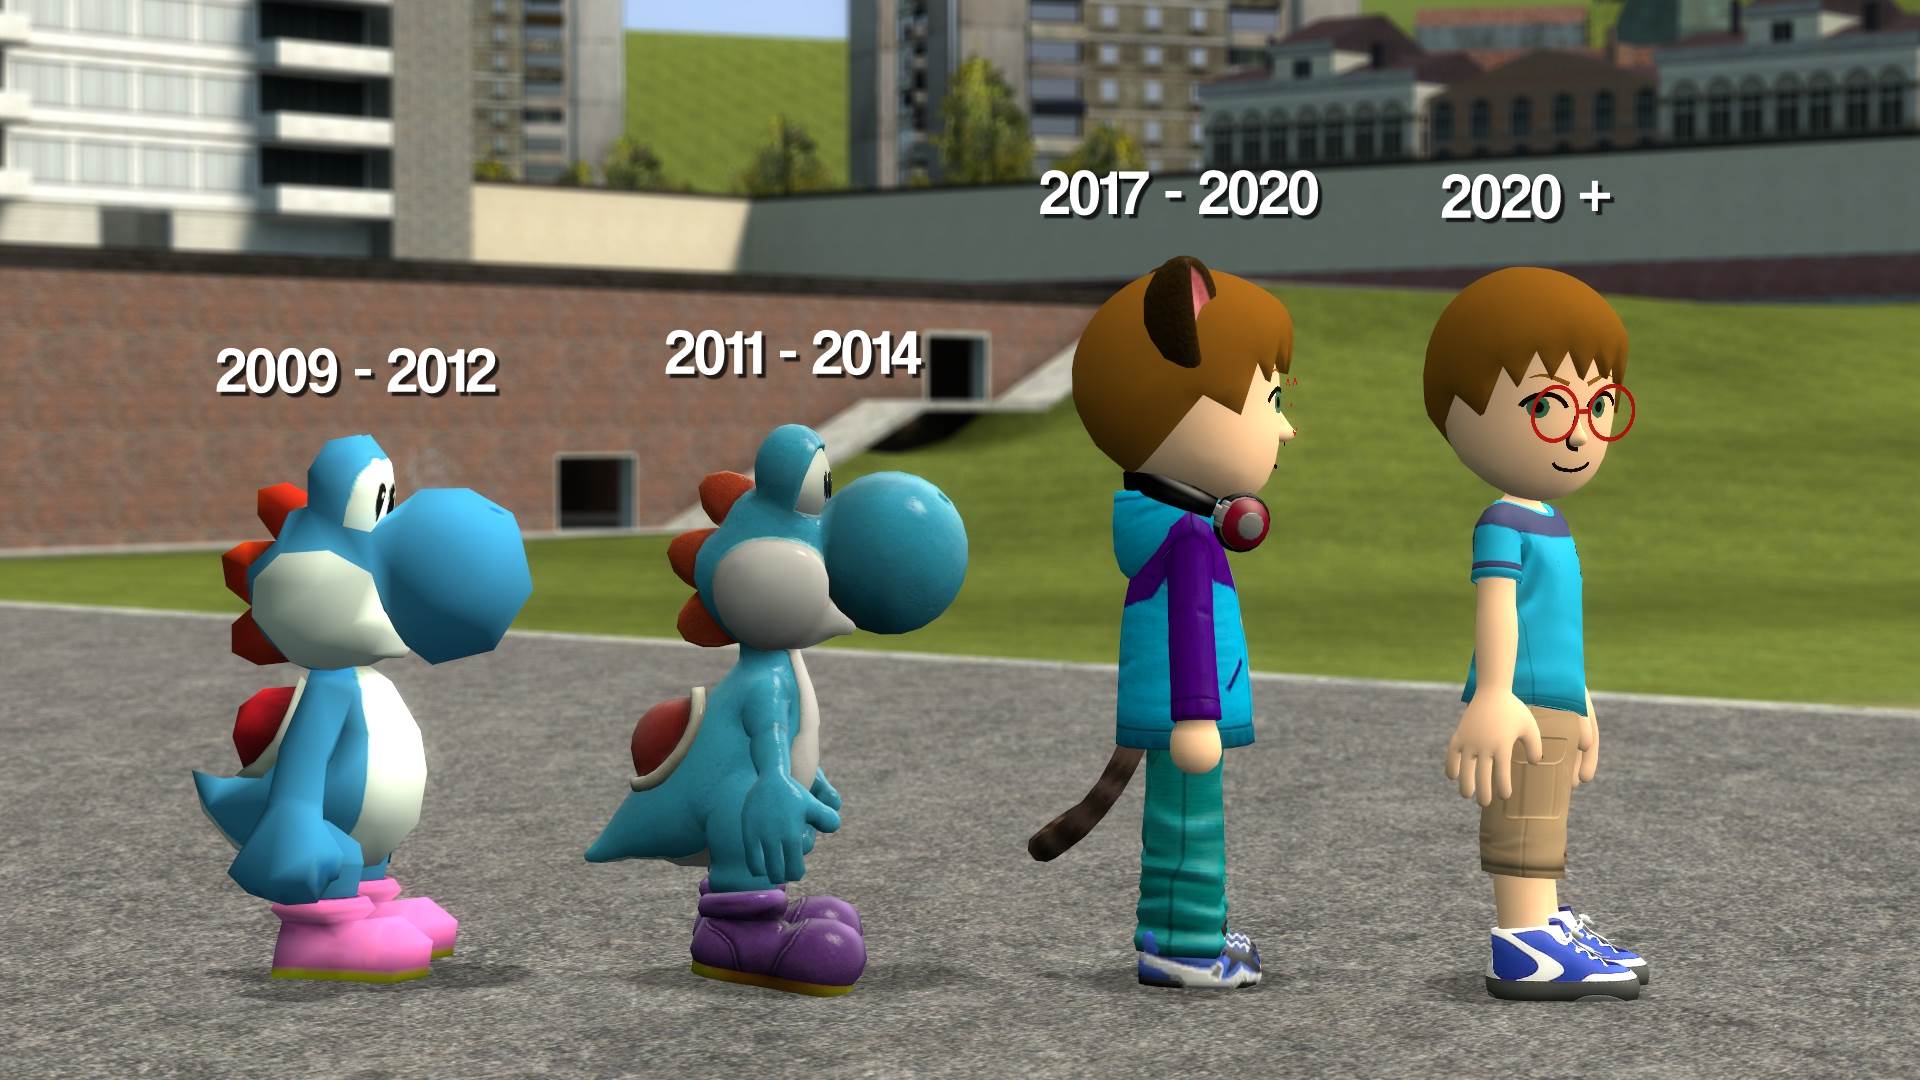 Garry's Mod in 2020 